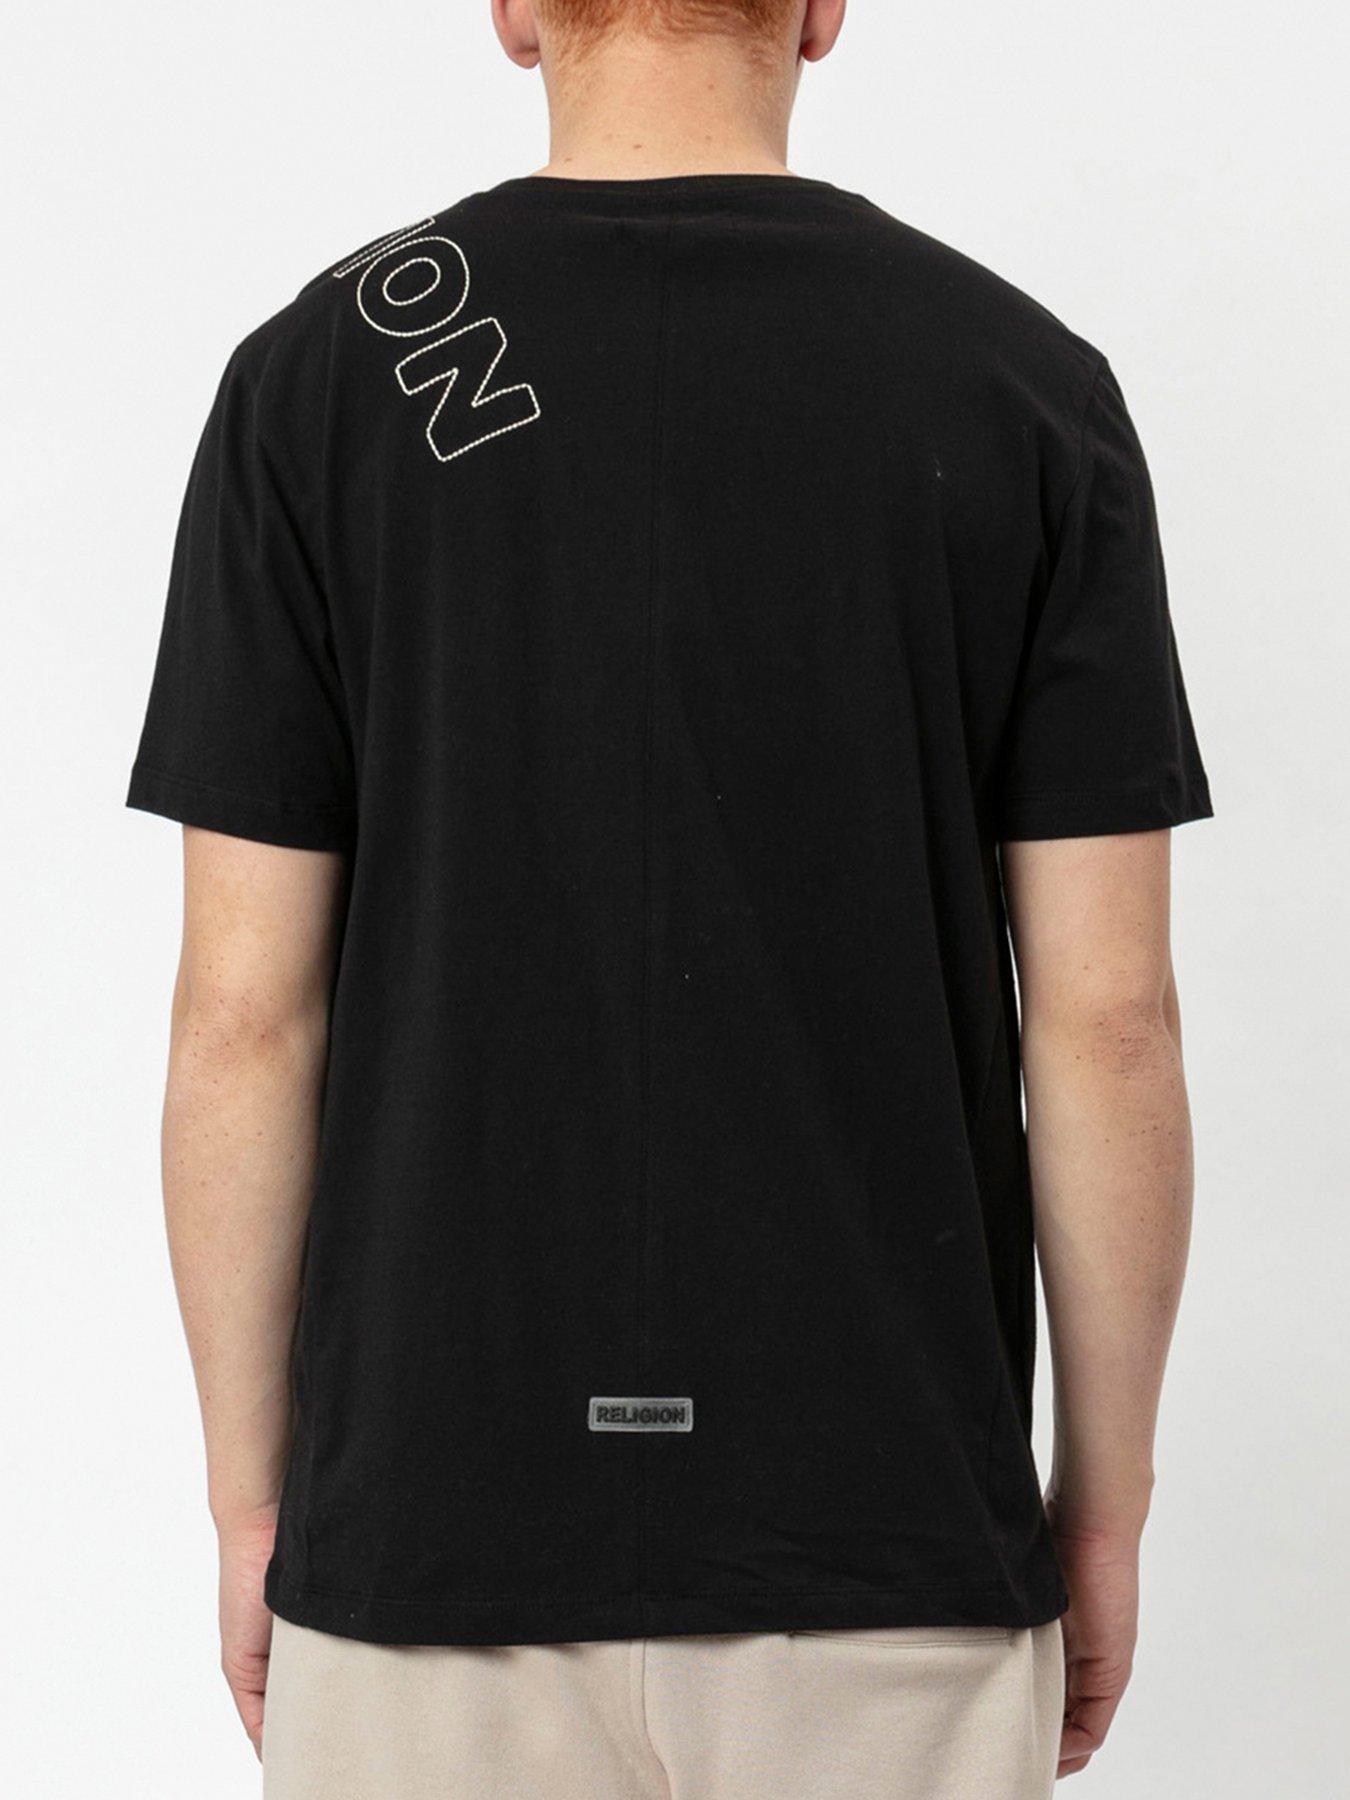  Dimension Logo T-shirt - Black